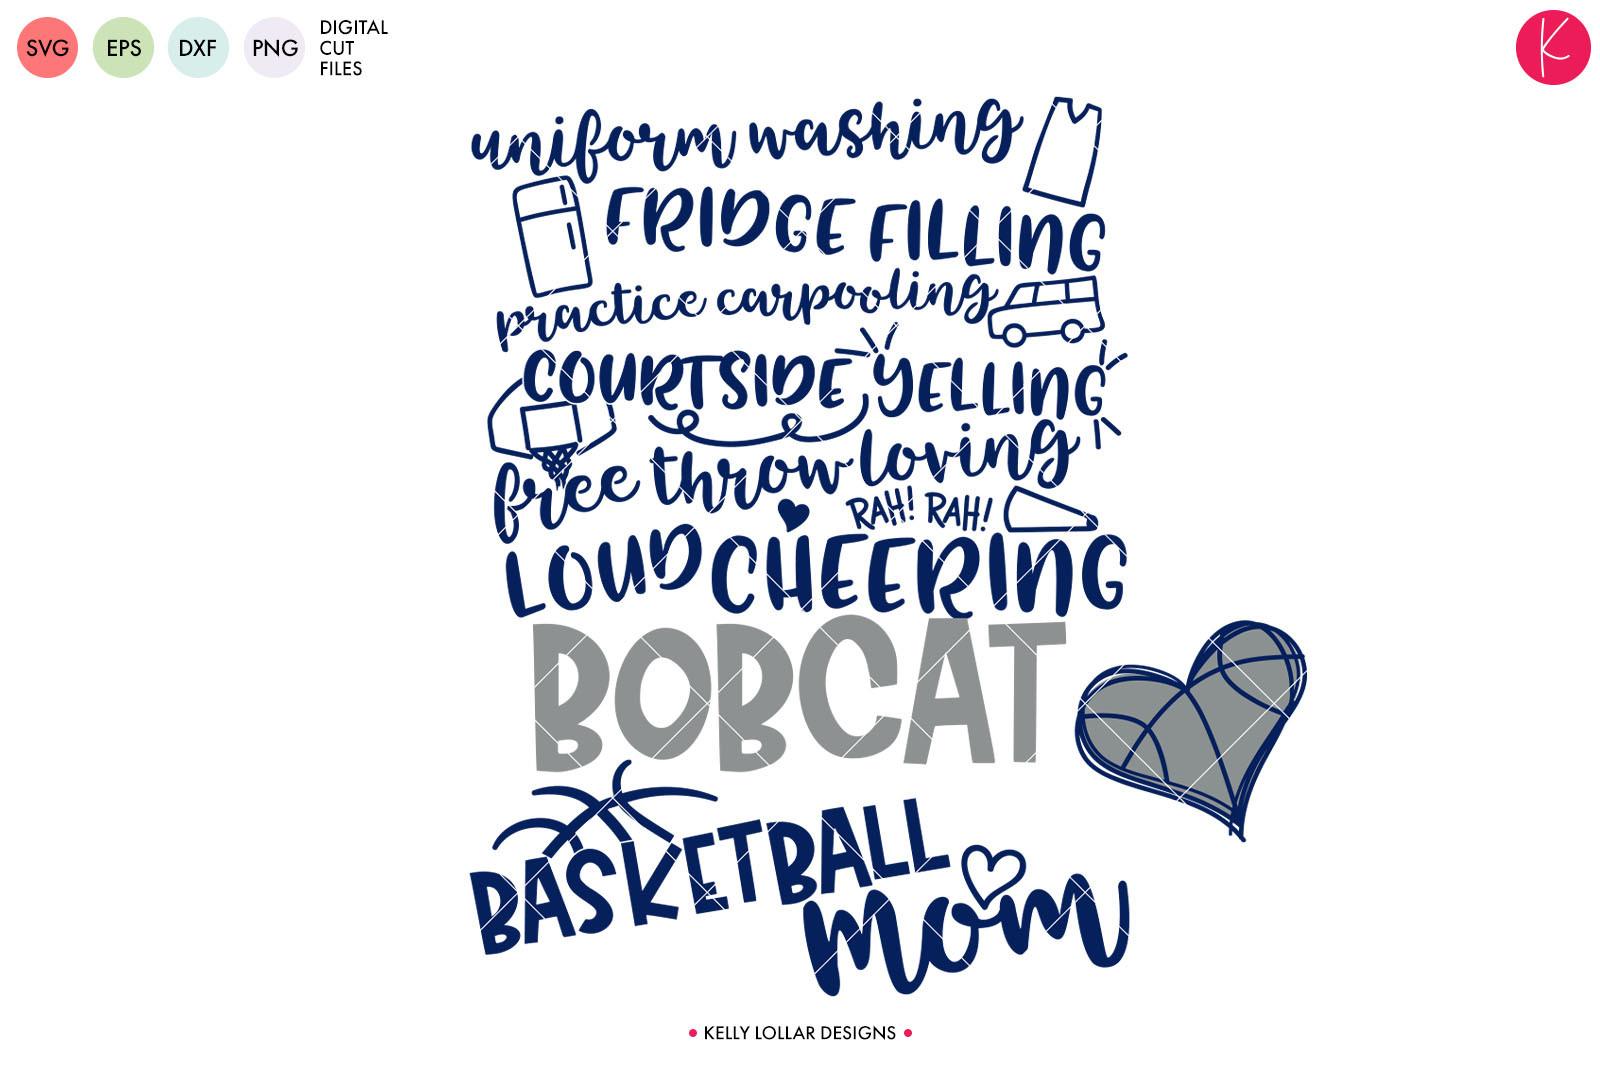 Bobcats Basketball Mom